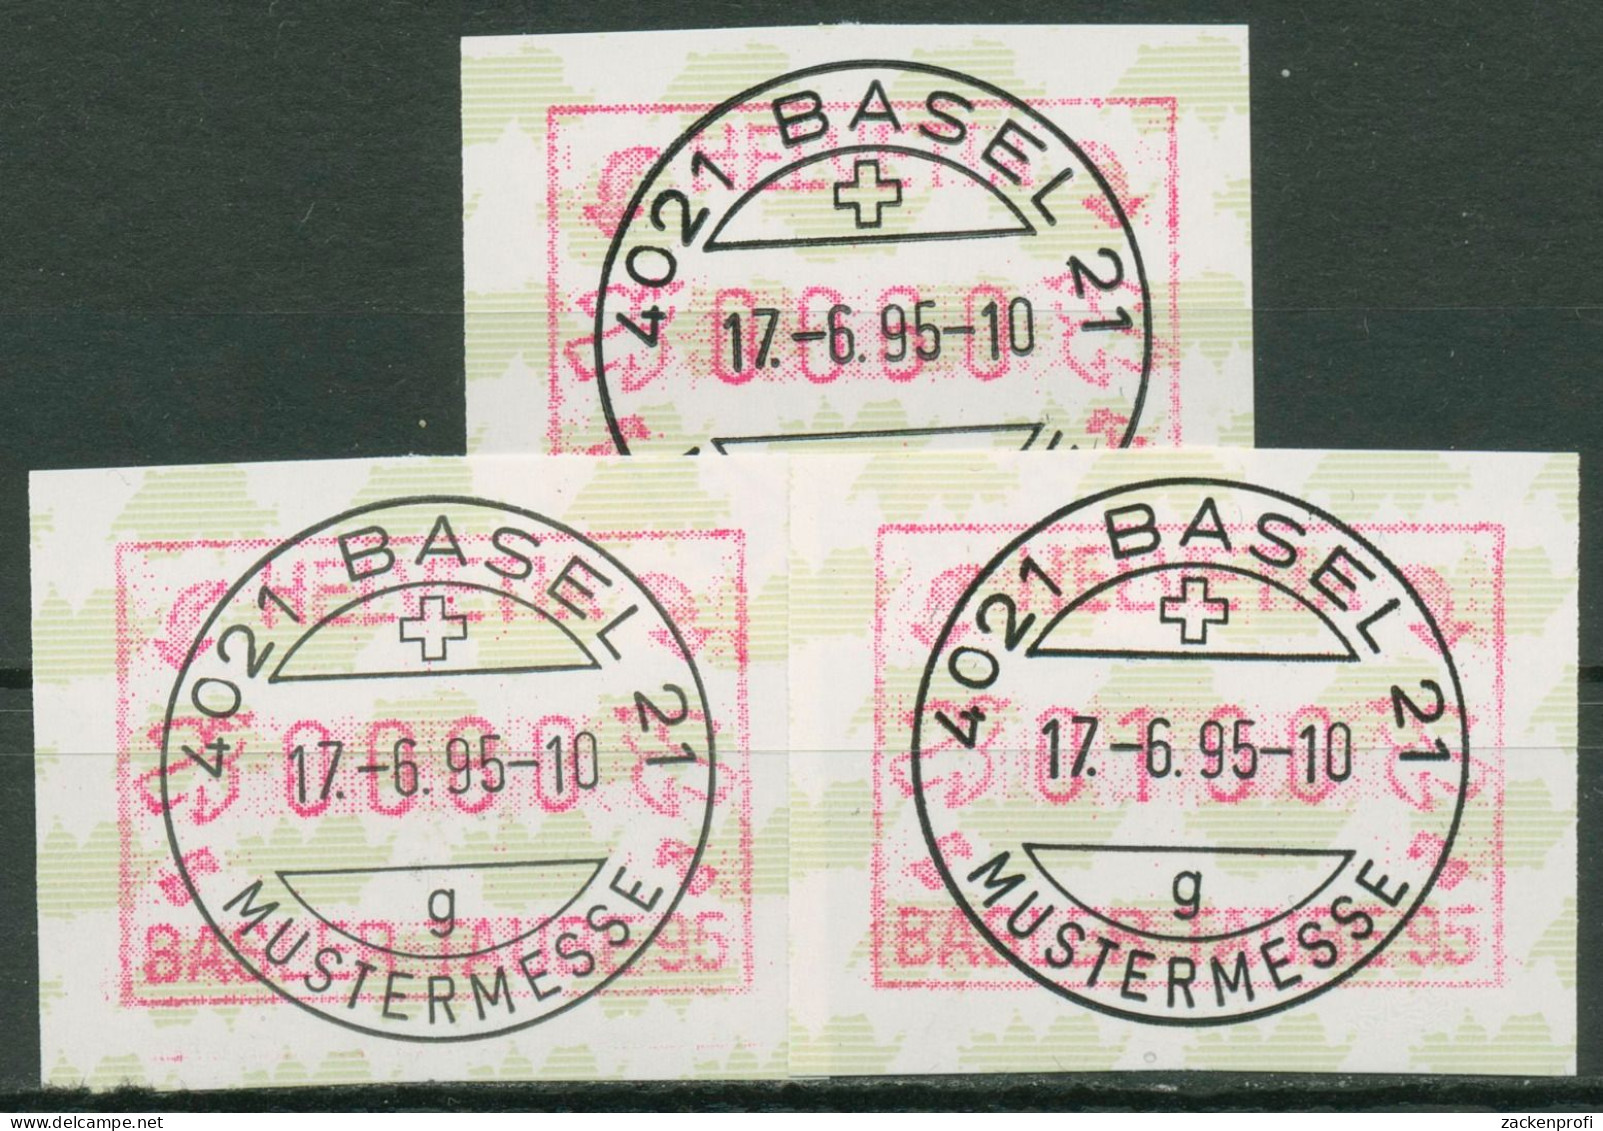 Schweiz Automatenmarken 1995 Basler Taube ATM 6 S 1 Gestempelt - Sellos De Distribuidores